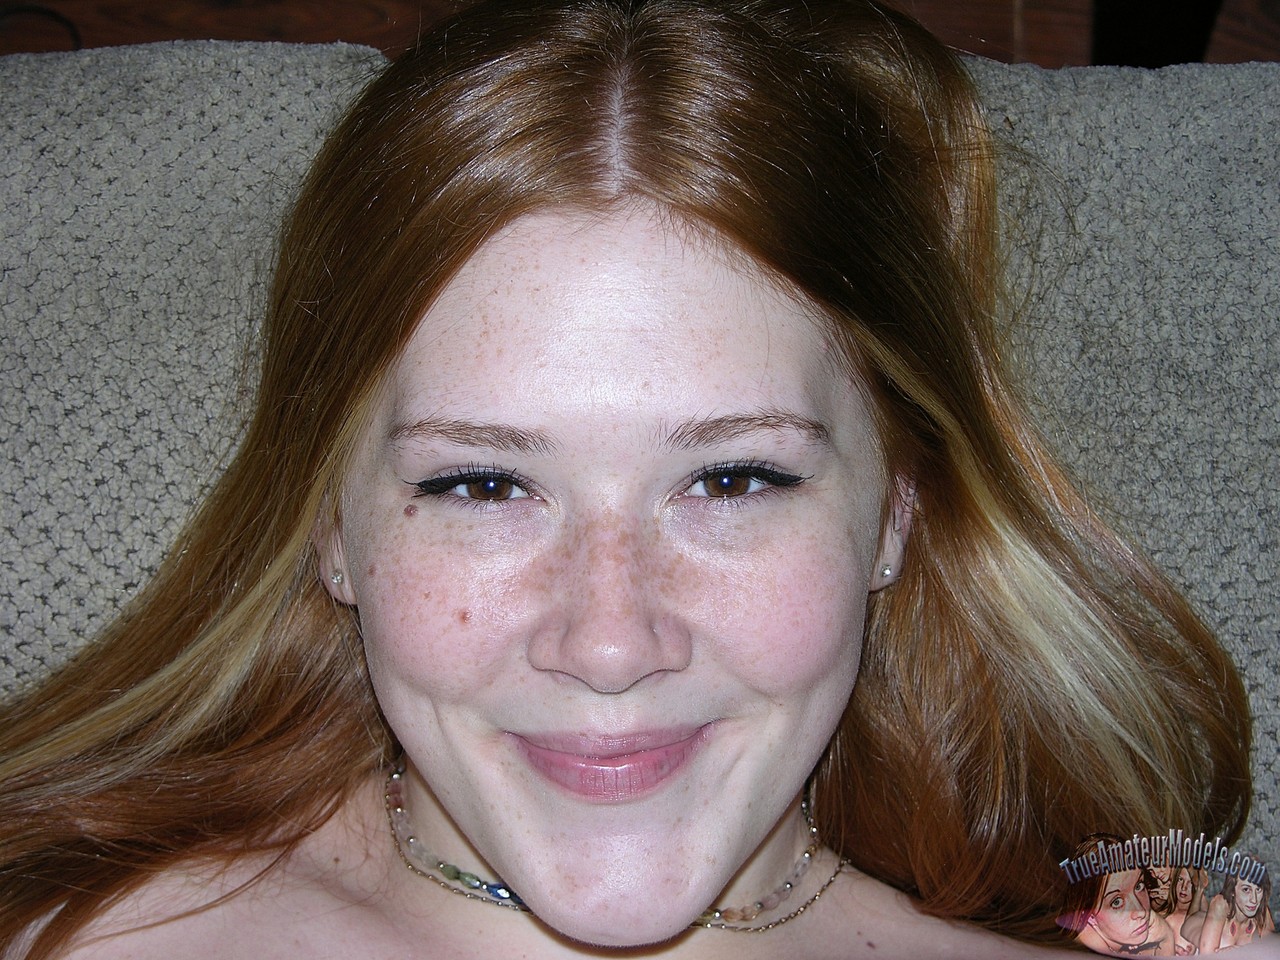 Freckled Face Redhead Amateur Teen Pulling Down Shorts To Expose Butthole порно фото #422855440 | True Amateur Models Pics, Harper R, Face, мобильное порно